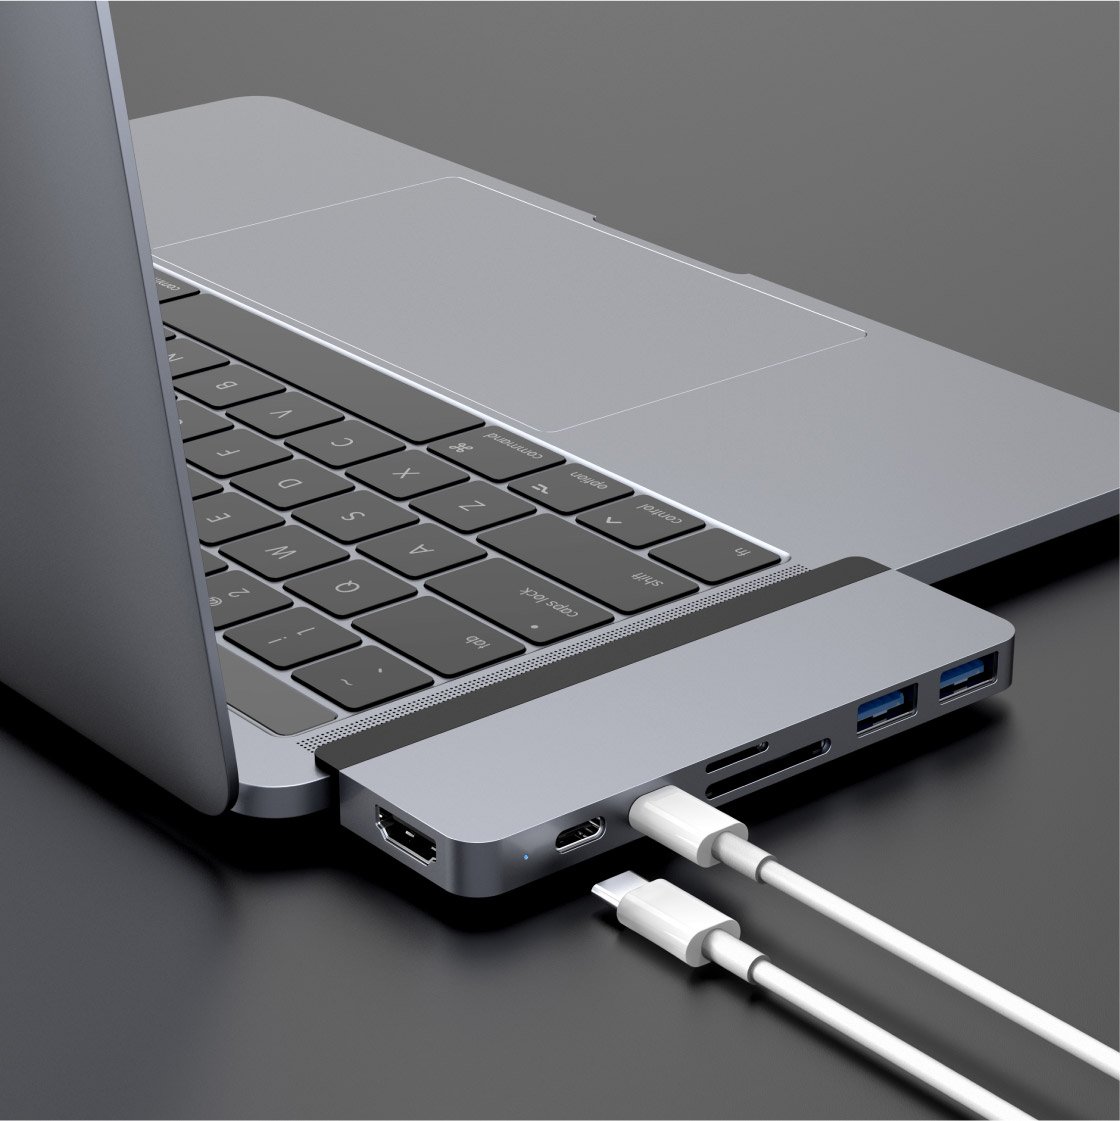 CỔNG CHUYỂN HYPERDRIVE DUO 7-IN-2 HDMI 4K/60HZ WITH CABLE USB-C HUB FOR MACBOOK/IPADPRO/LAPTOP/SMARTPHONE - Hàng chính hãng